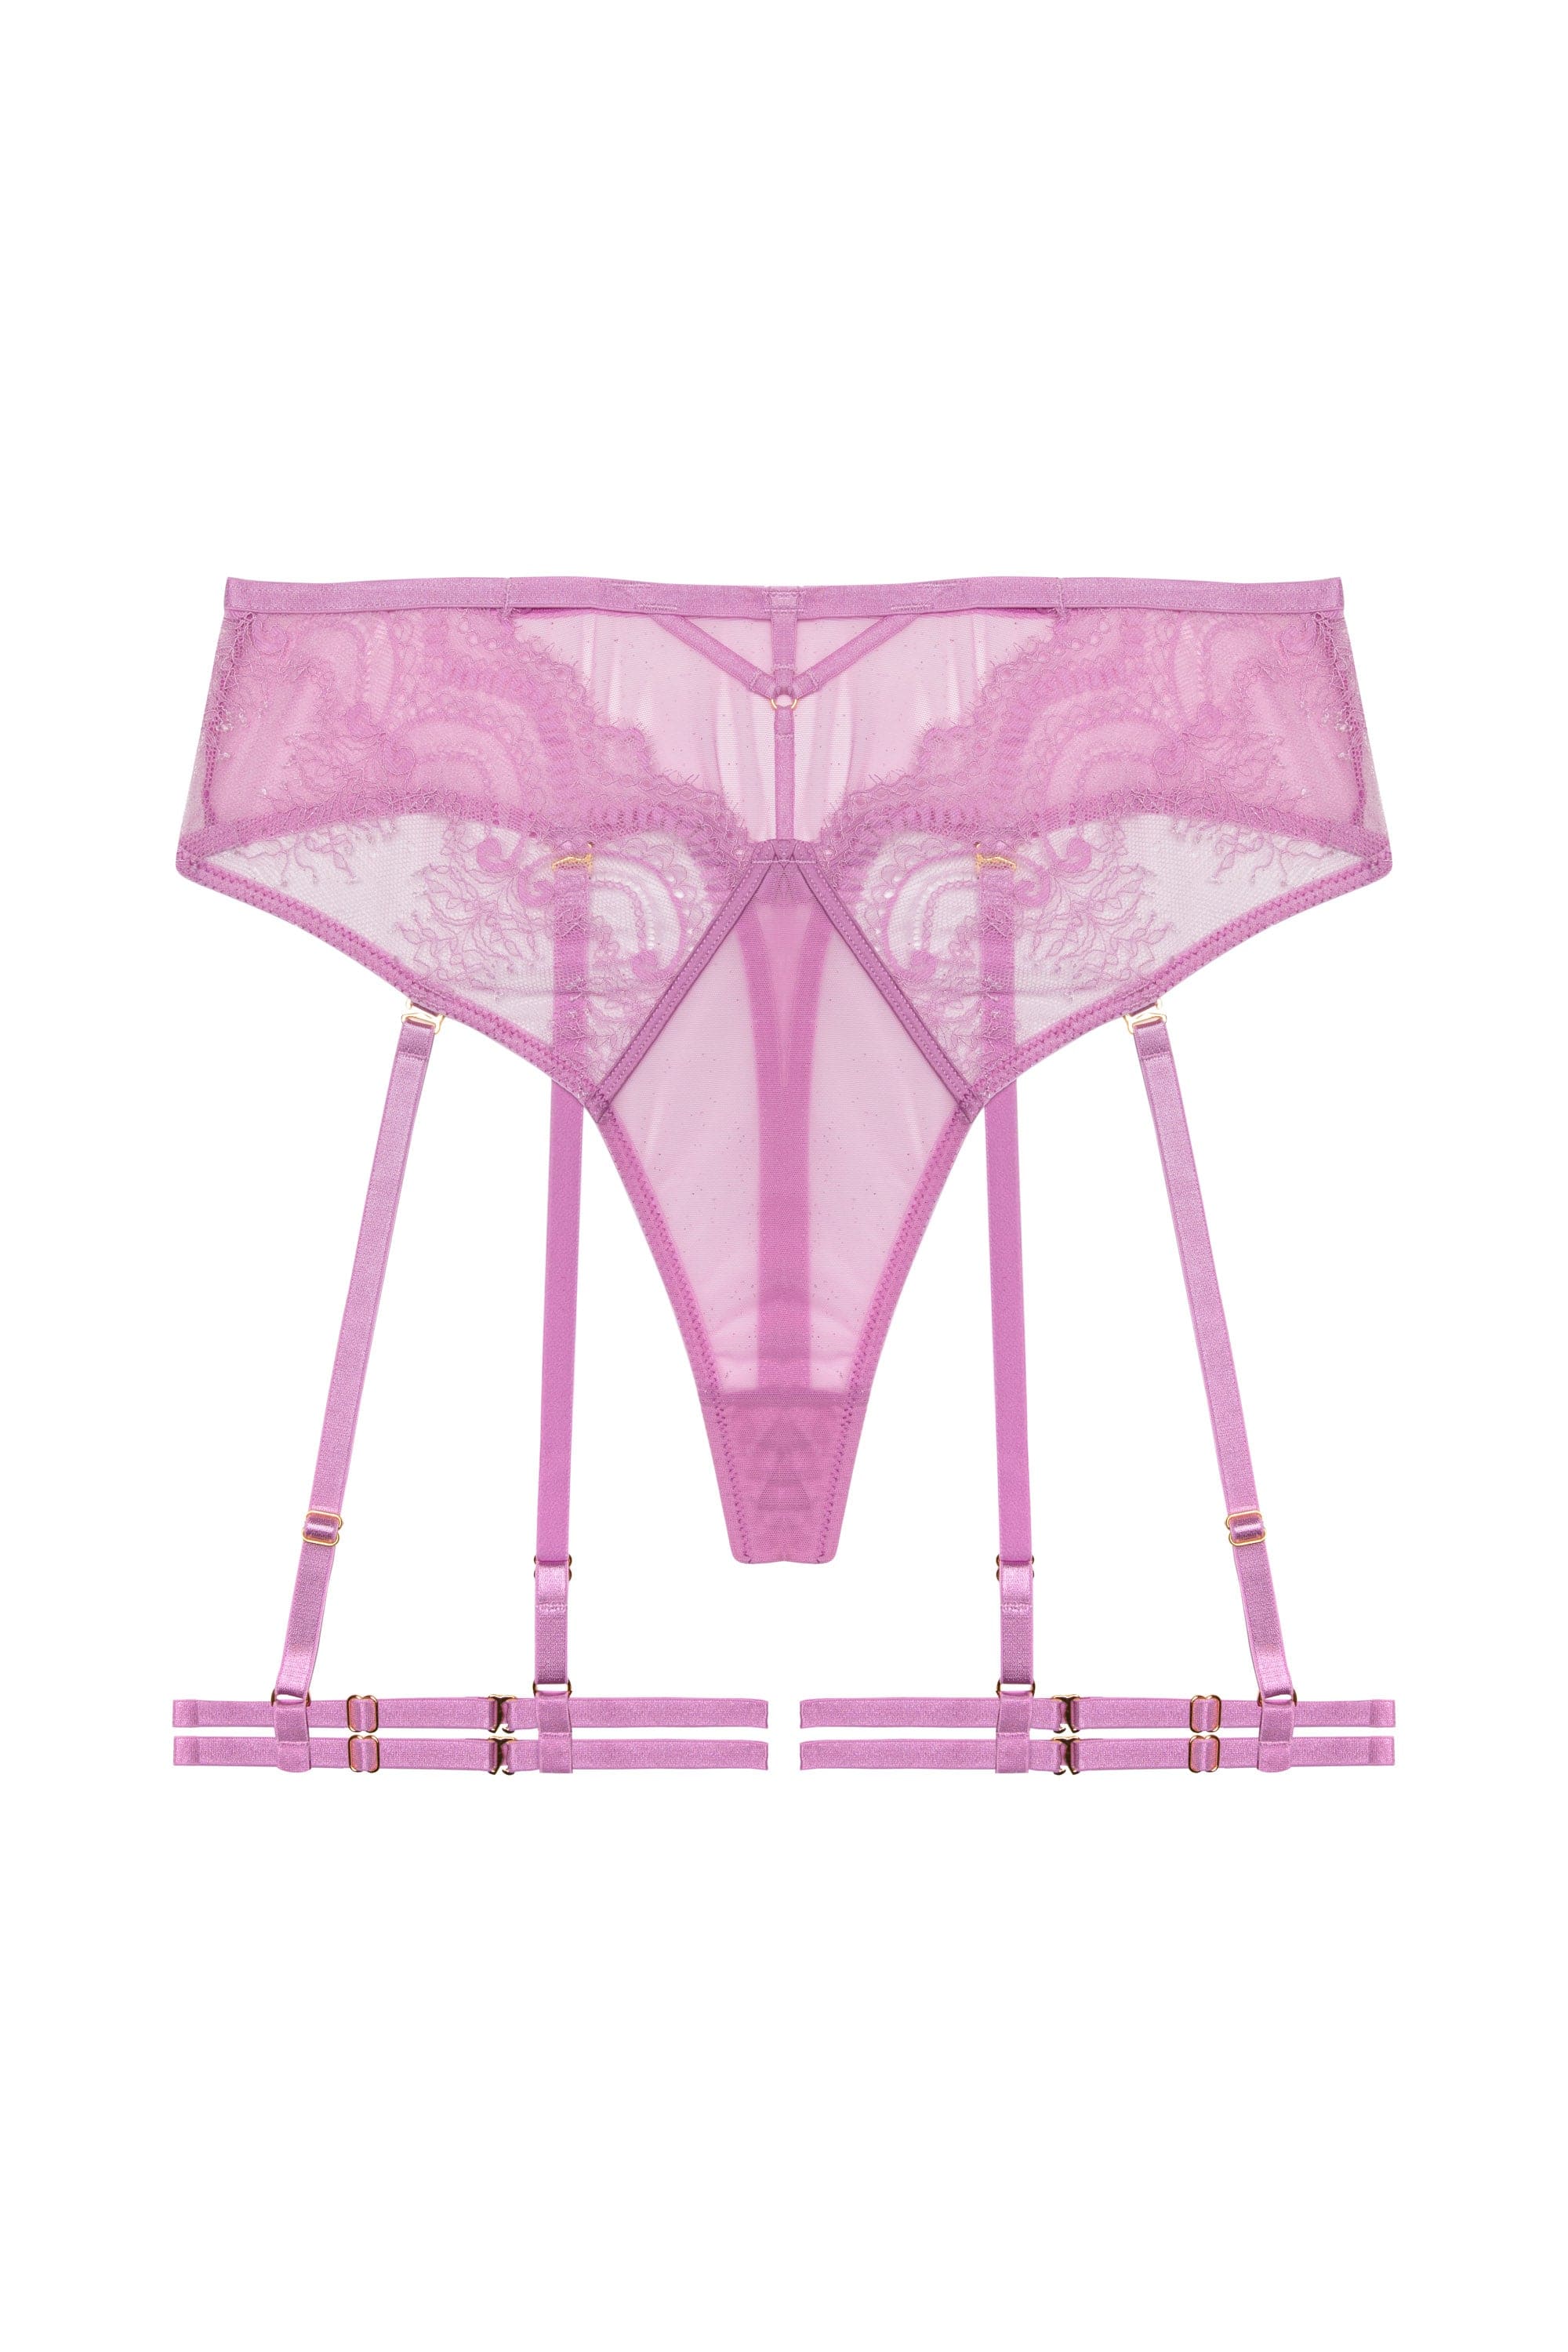 Marlie Pink Lace High Waist Suspender Thong – Playful Promises